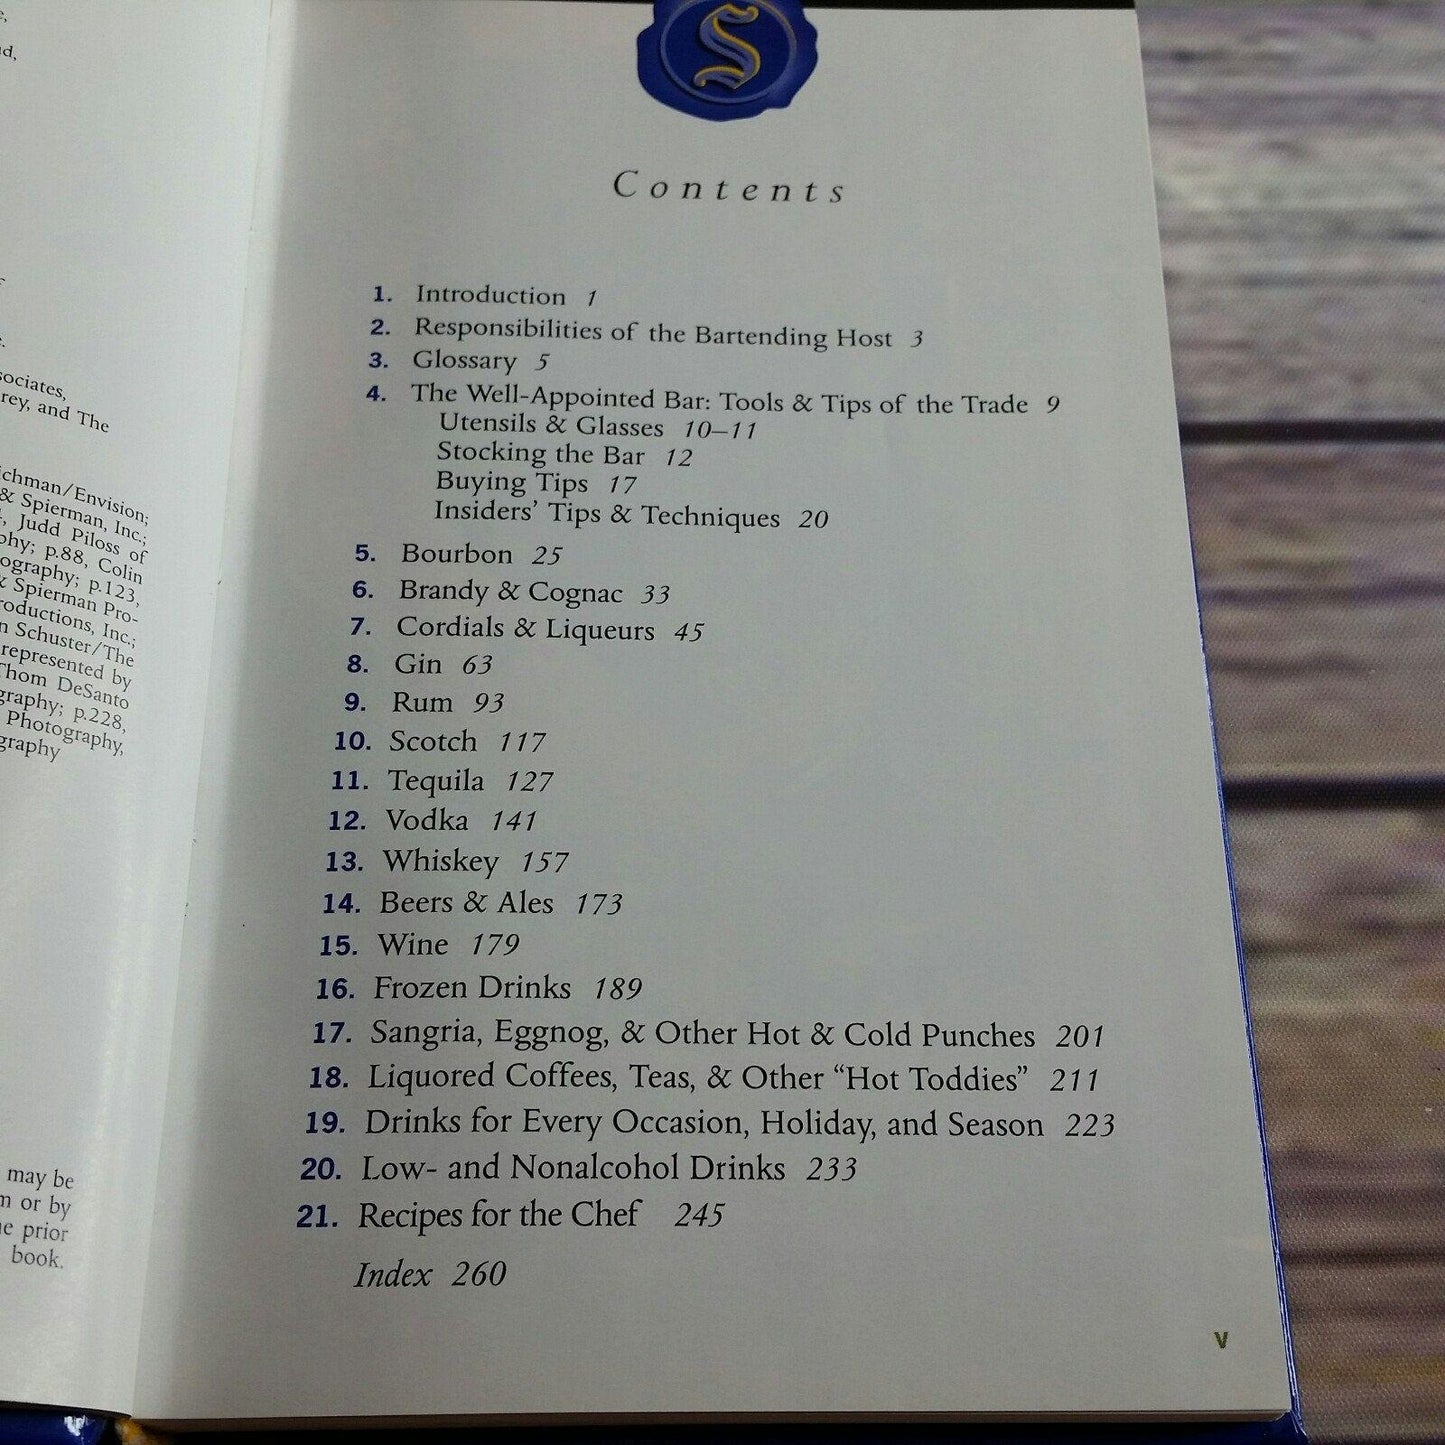 Vtg Seagrams Bartending Guide Bartenders Recipes Cookbook Food and Drink 1995